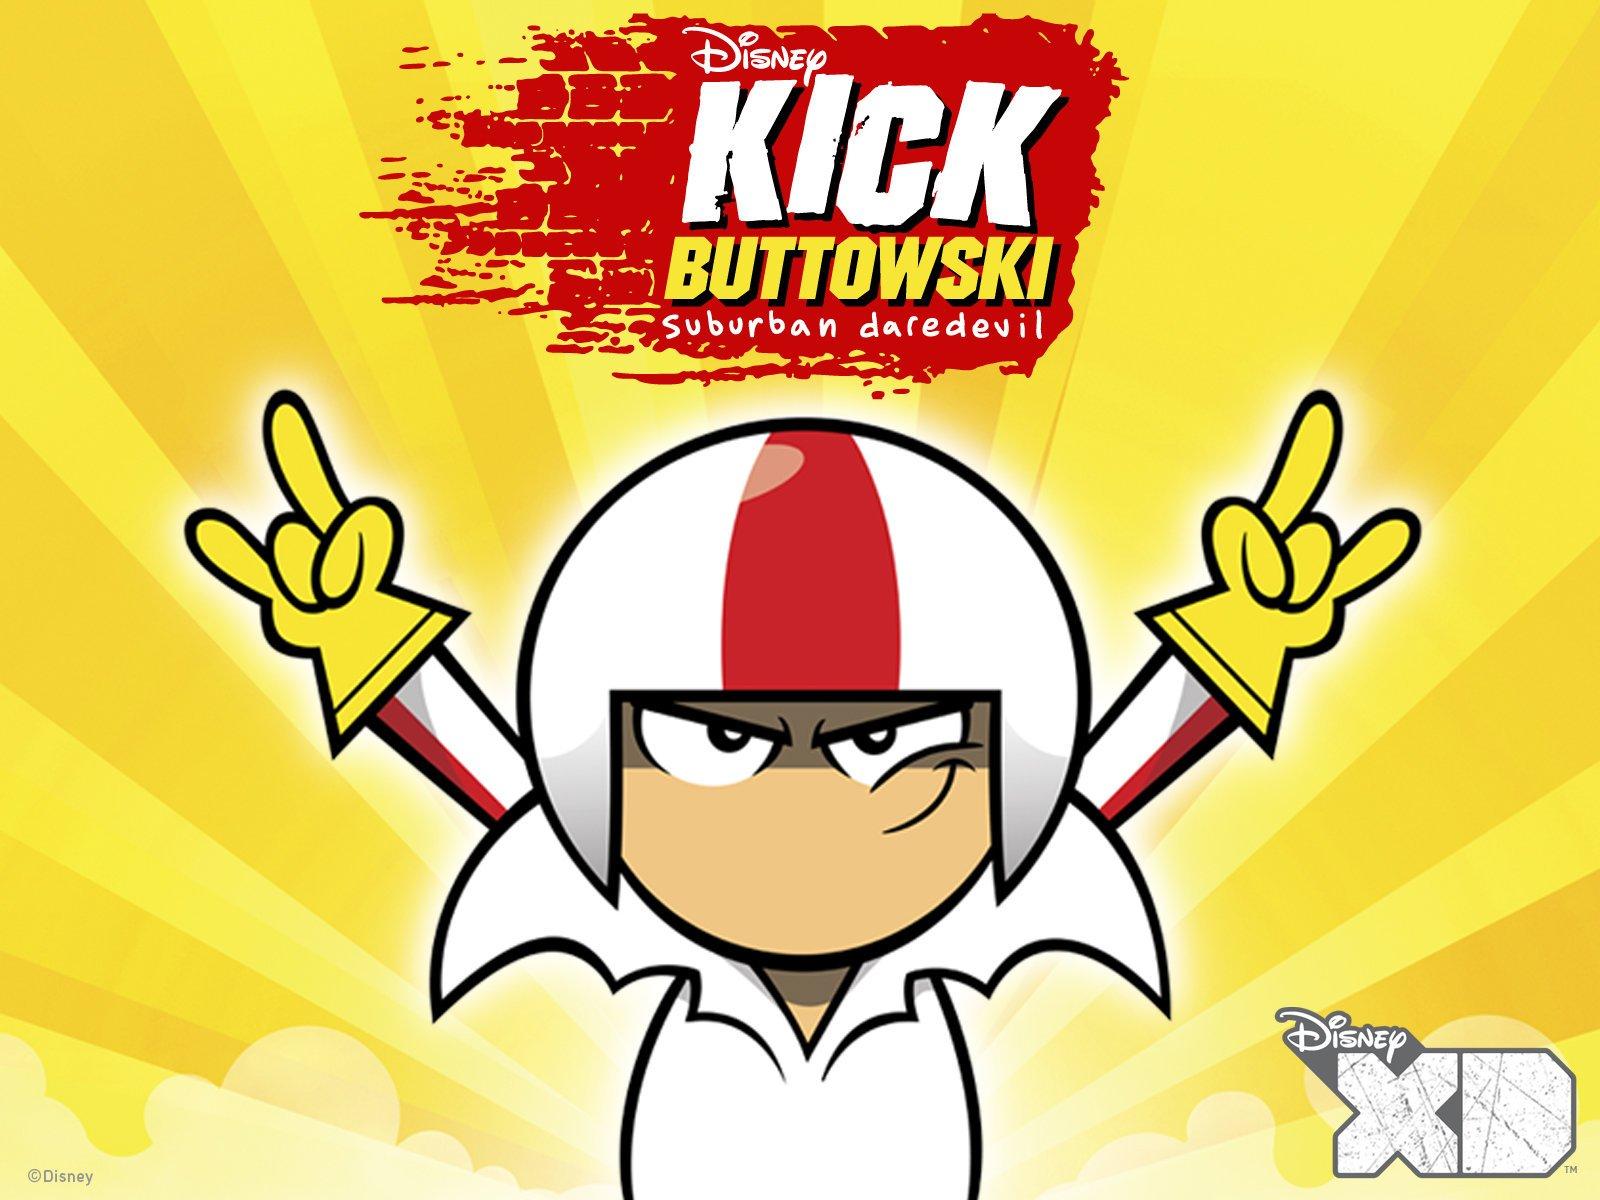 Download Kick buttowSki wallpaper by Evilstarsai - 2f - Free on